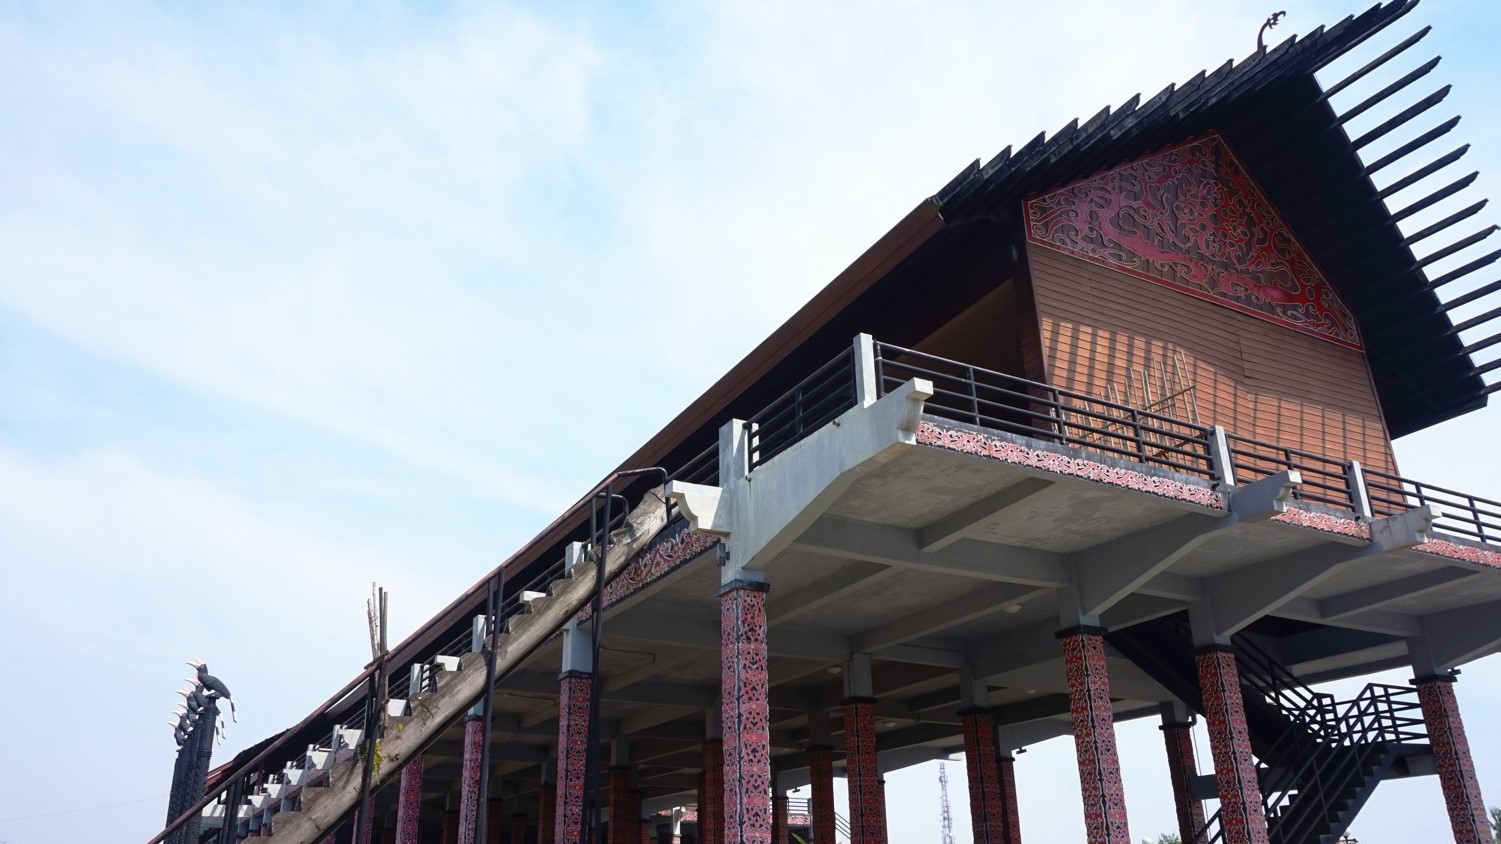 7 Rumah Adat Kalimantan Barat: Nama, Ciri Khas, Arsitektur, Fungsi